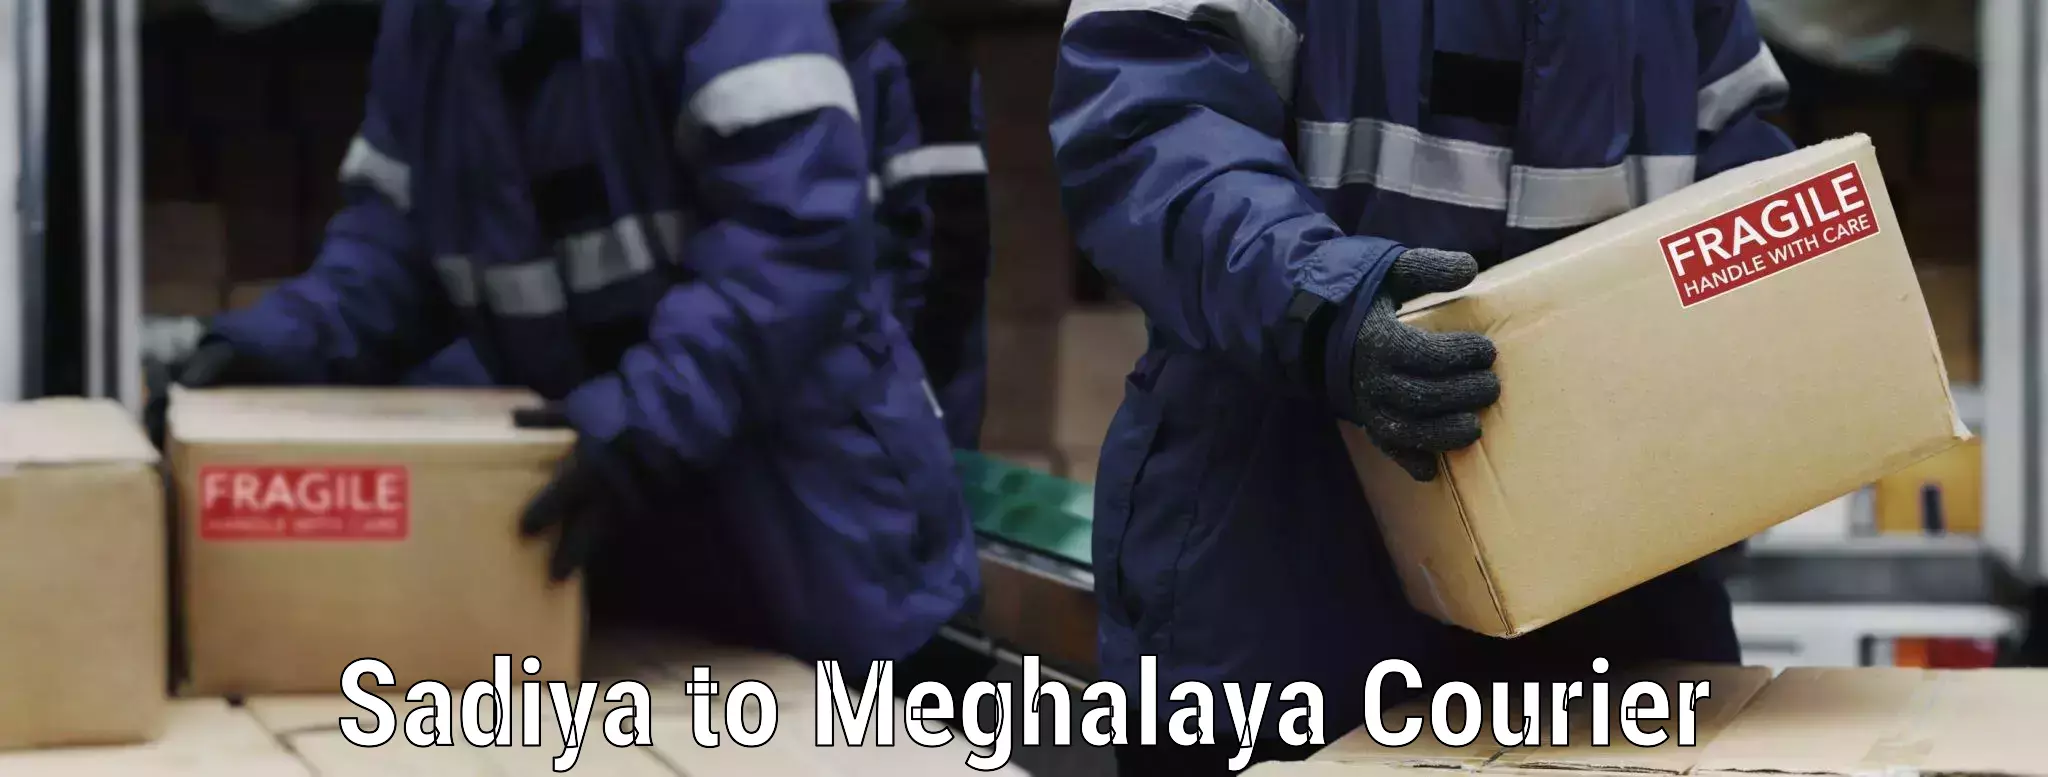 Cost-effective moving options Sadiya to Meghalaya